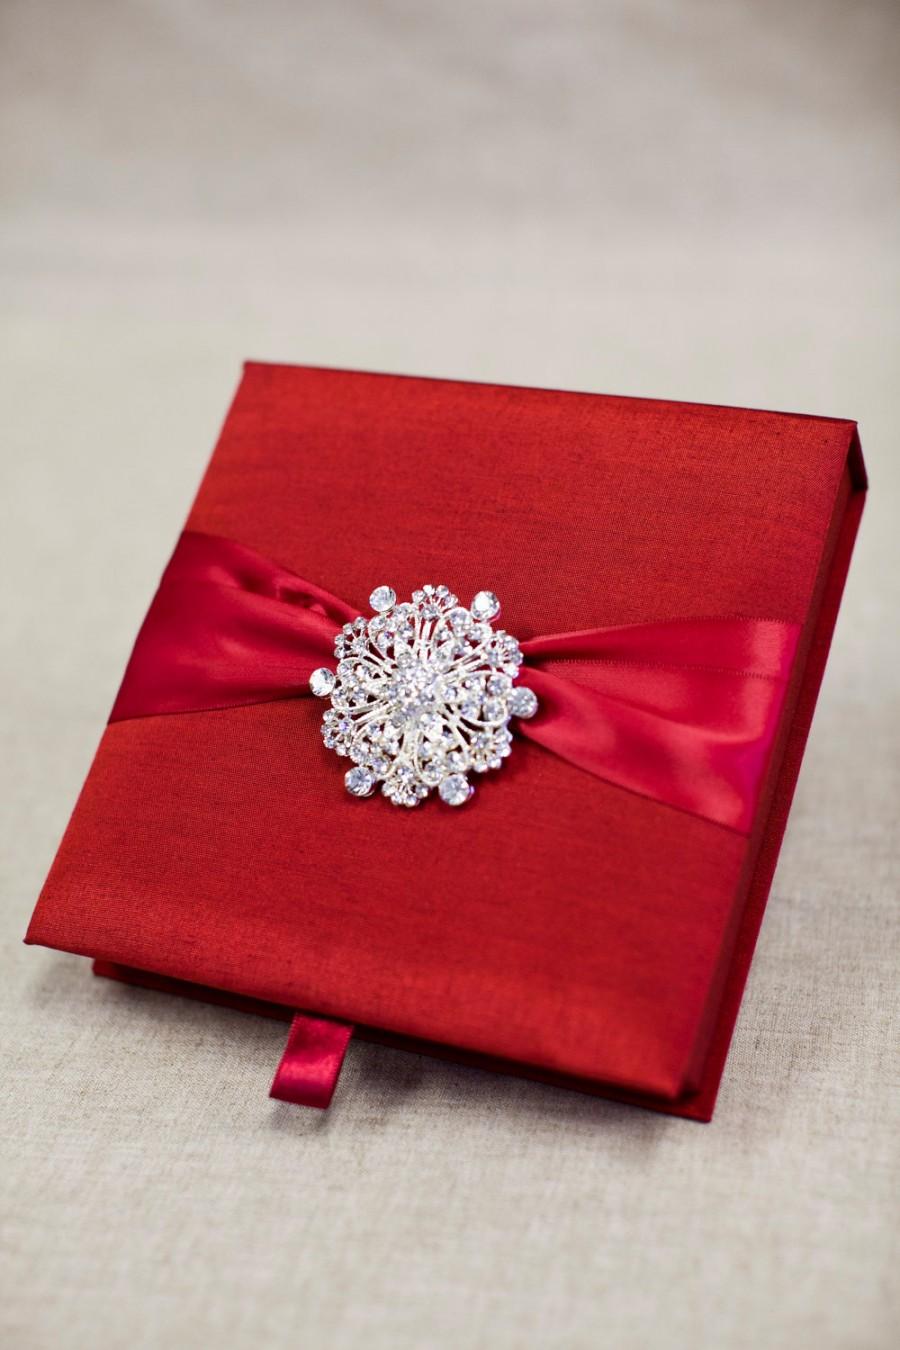 Mariage - Wedding Invitation Silk Fabric Box with Satin Ribbon and a Shimmery Rhinestone Brooch